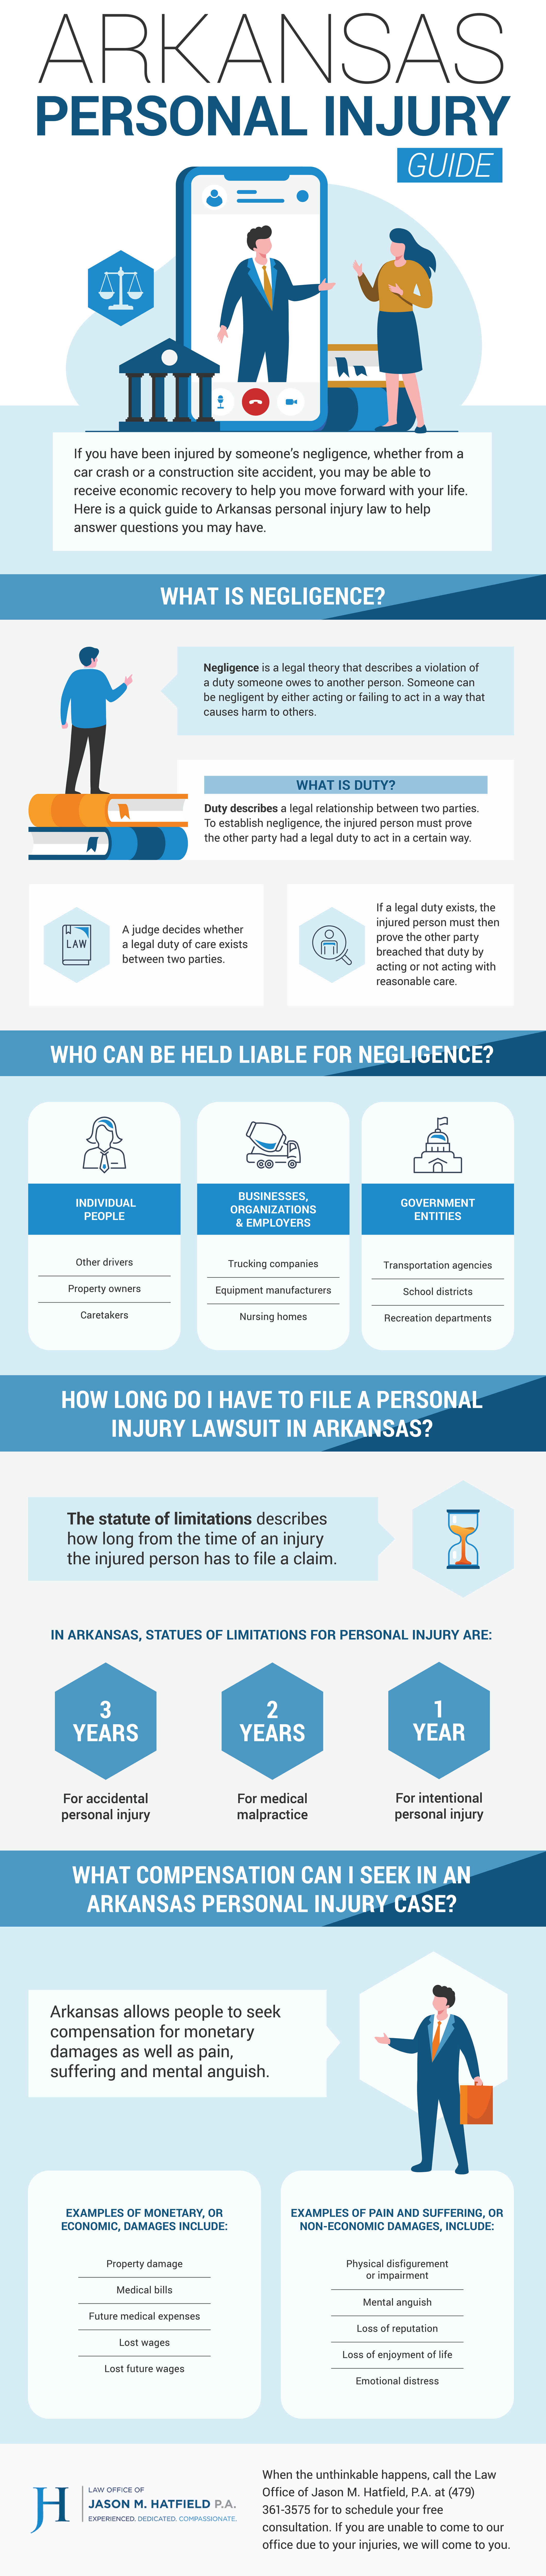 Arkansas Personal Injury Guide